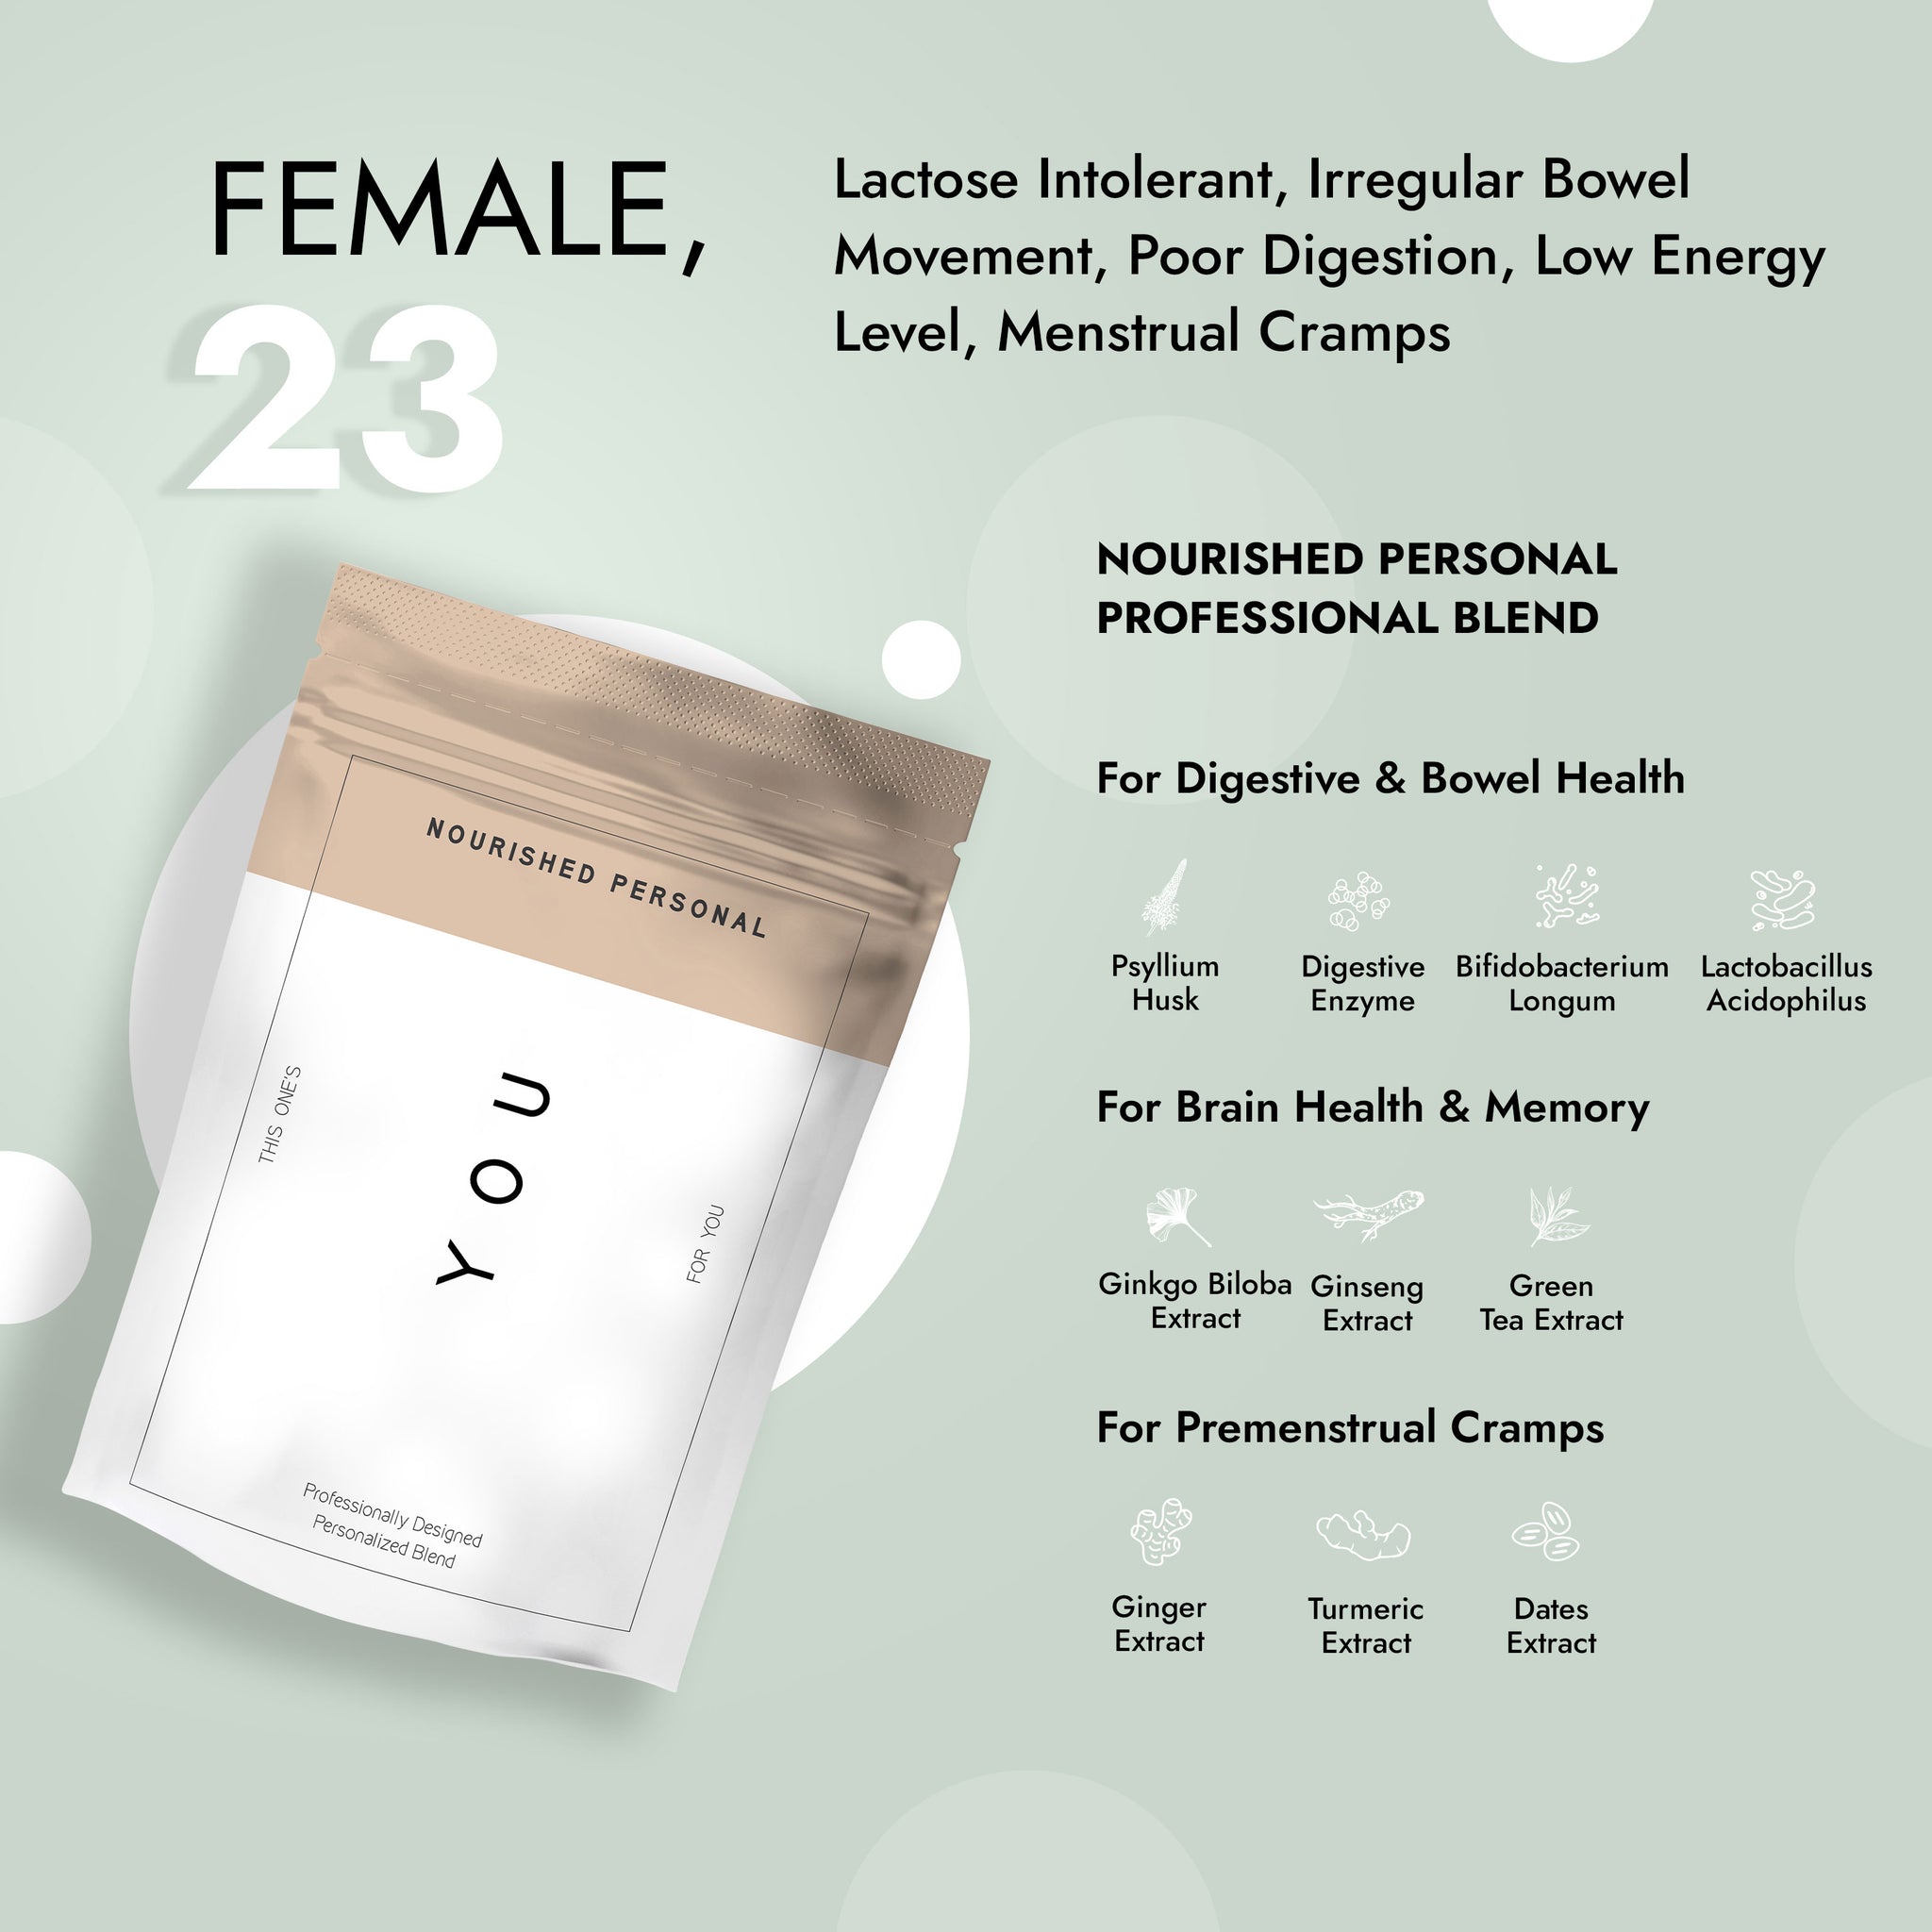 Case Study 49: Female, 23 - Lactose Intolerant, Irregular Bowel Movement, Poor Digestion, Low Energy Level, Menstrual Cramps